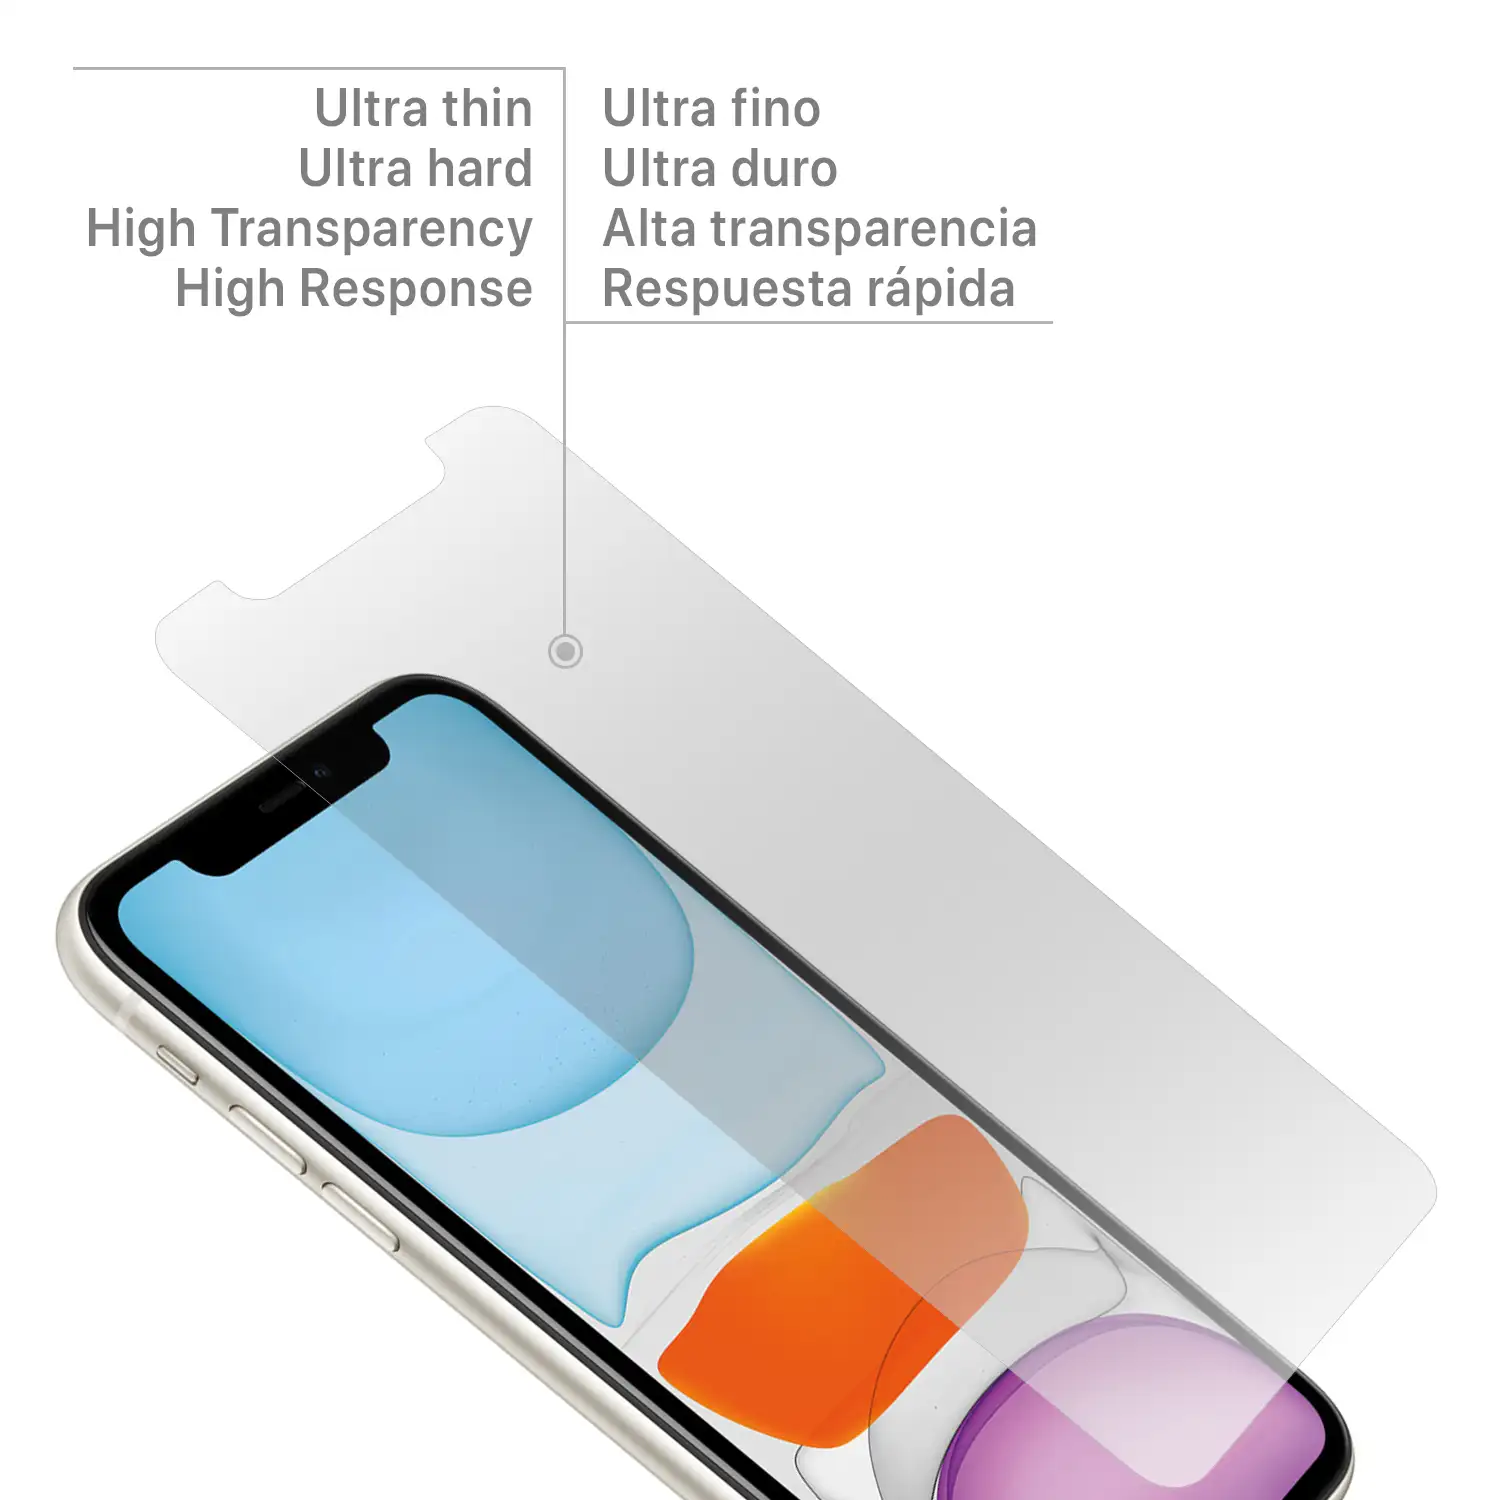  Protector de pantalla de cristal templado para iPhone 11.